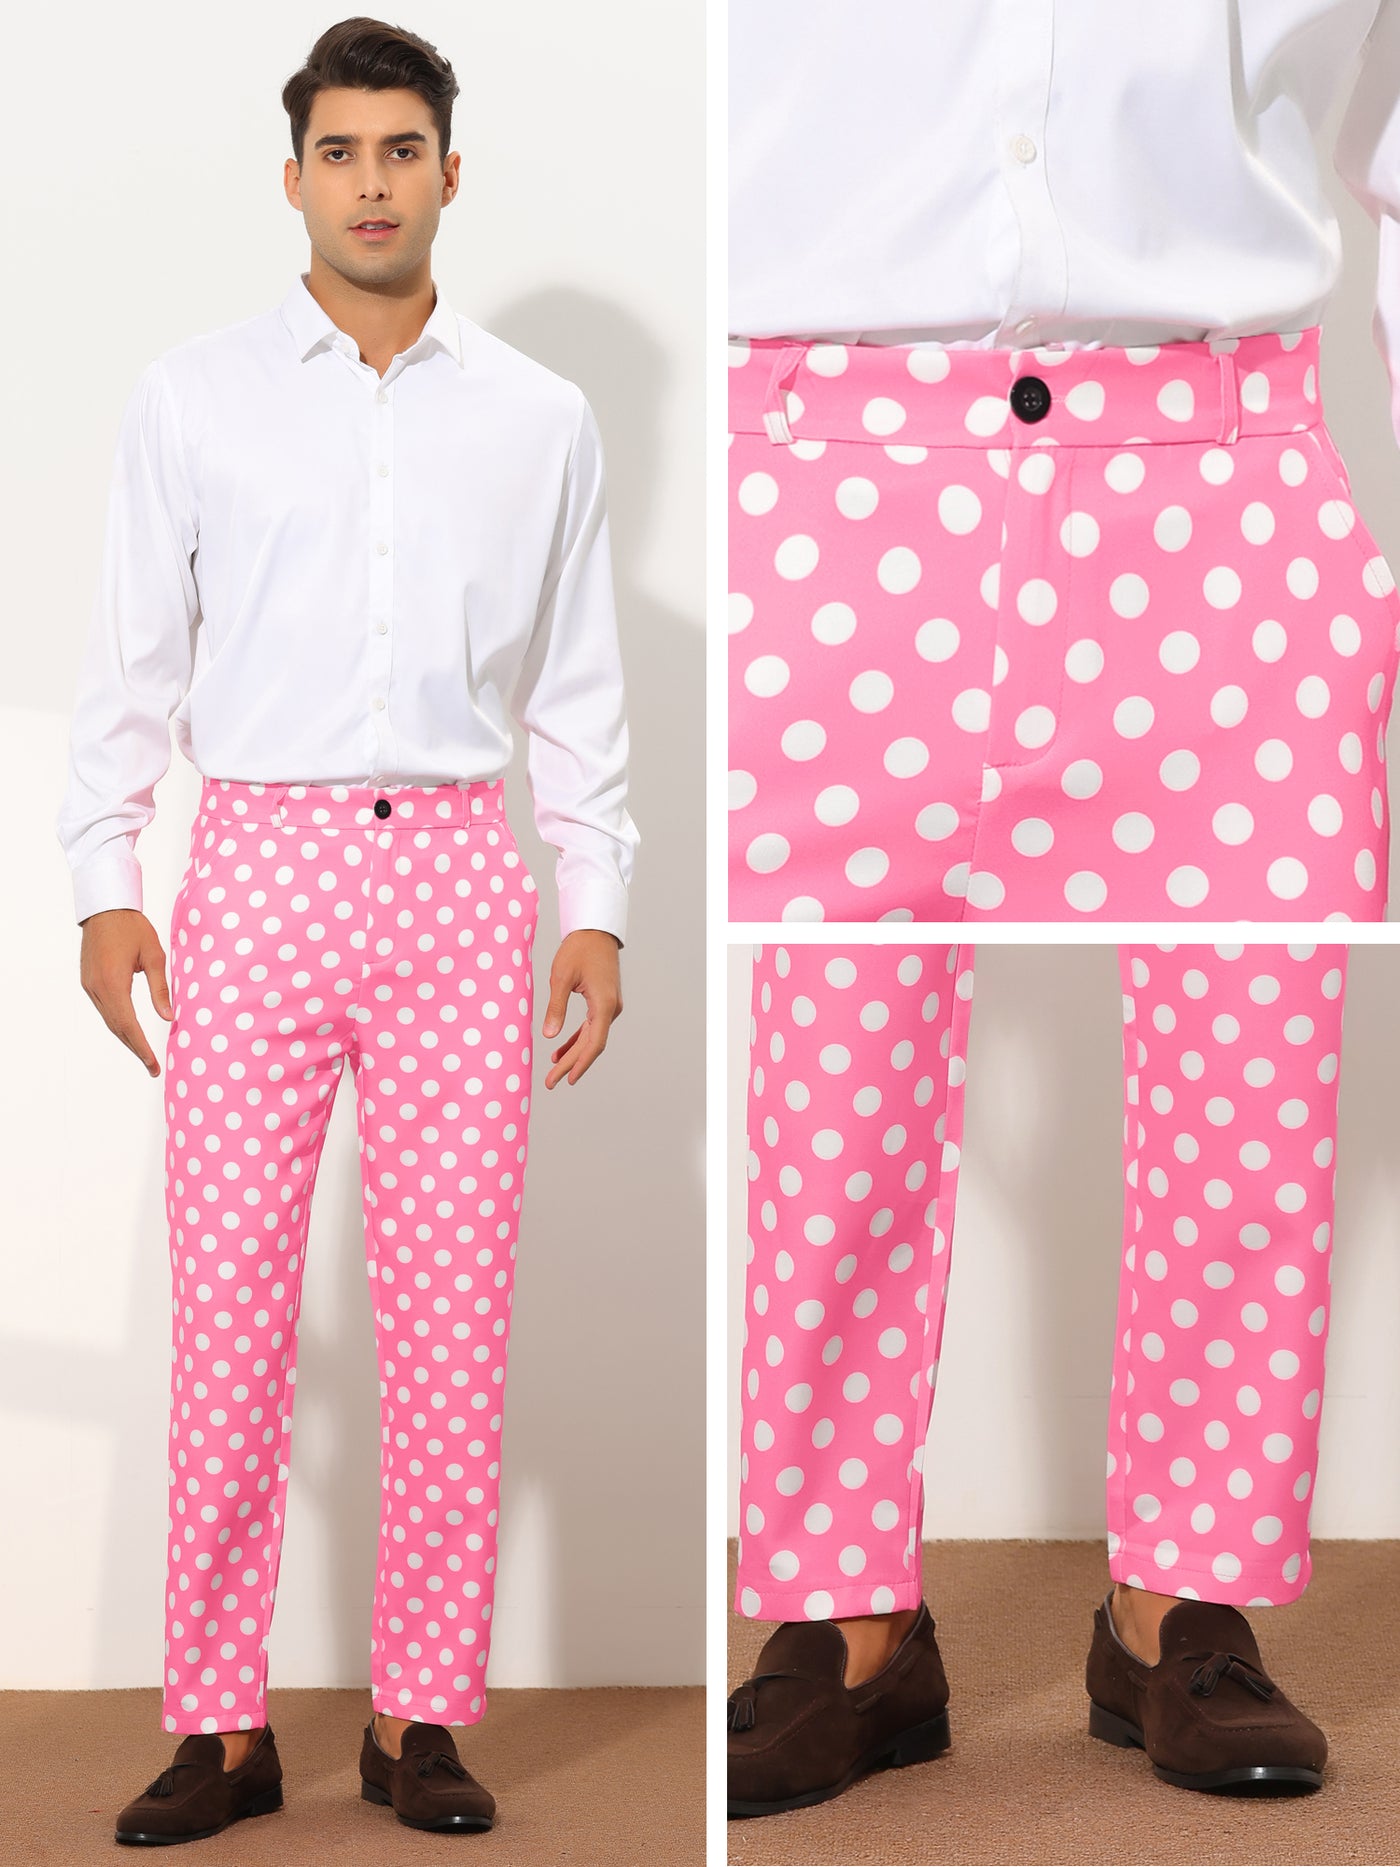 Bublédon Polka Dots Dress Pants for Men's Regular Fit Flat Front Formal Printed Trousers